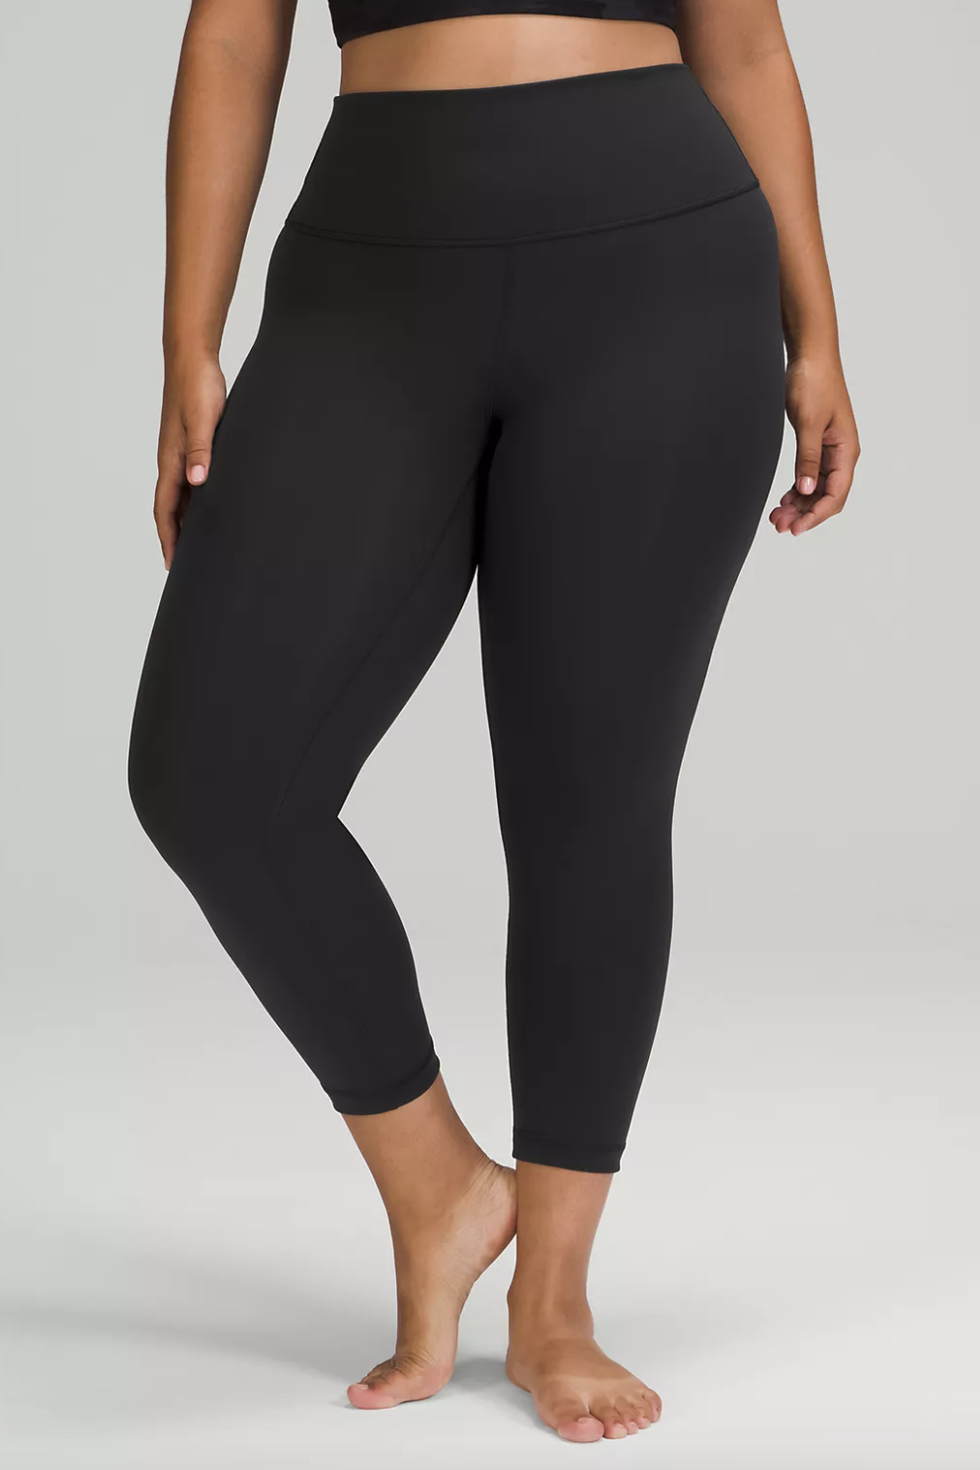 Spalding Women's Bootleg Yoga Pant, Black, Small Small, Black